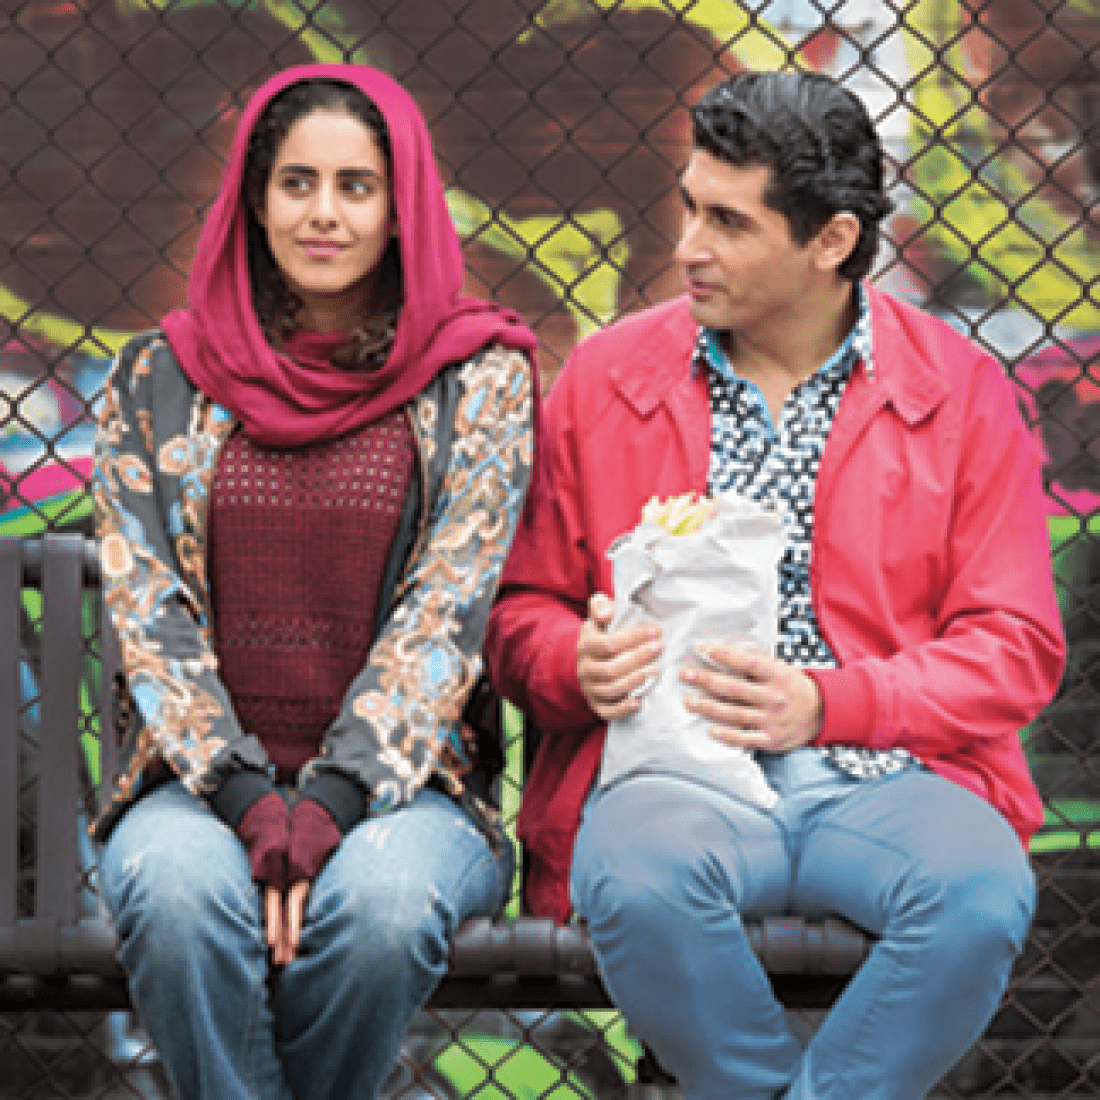 Ali's Wedding promo photo with woman in pink hajib sitting on bench next to man